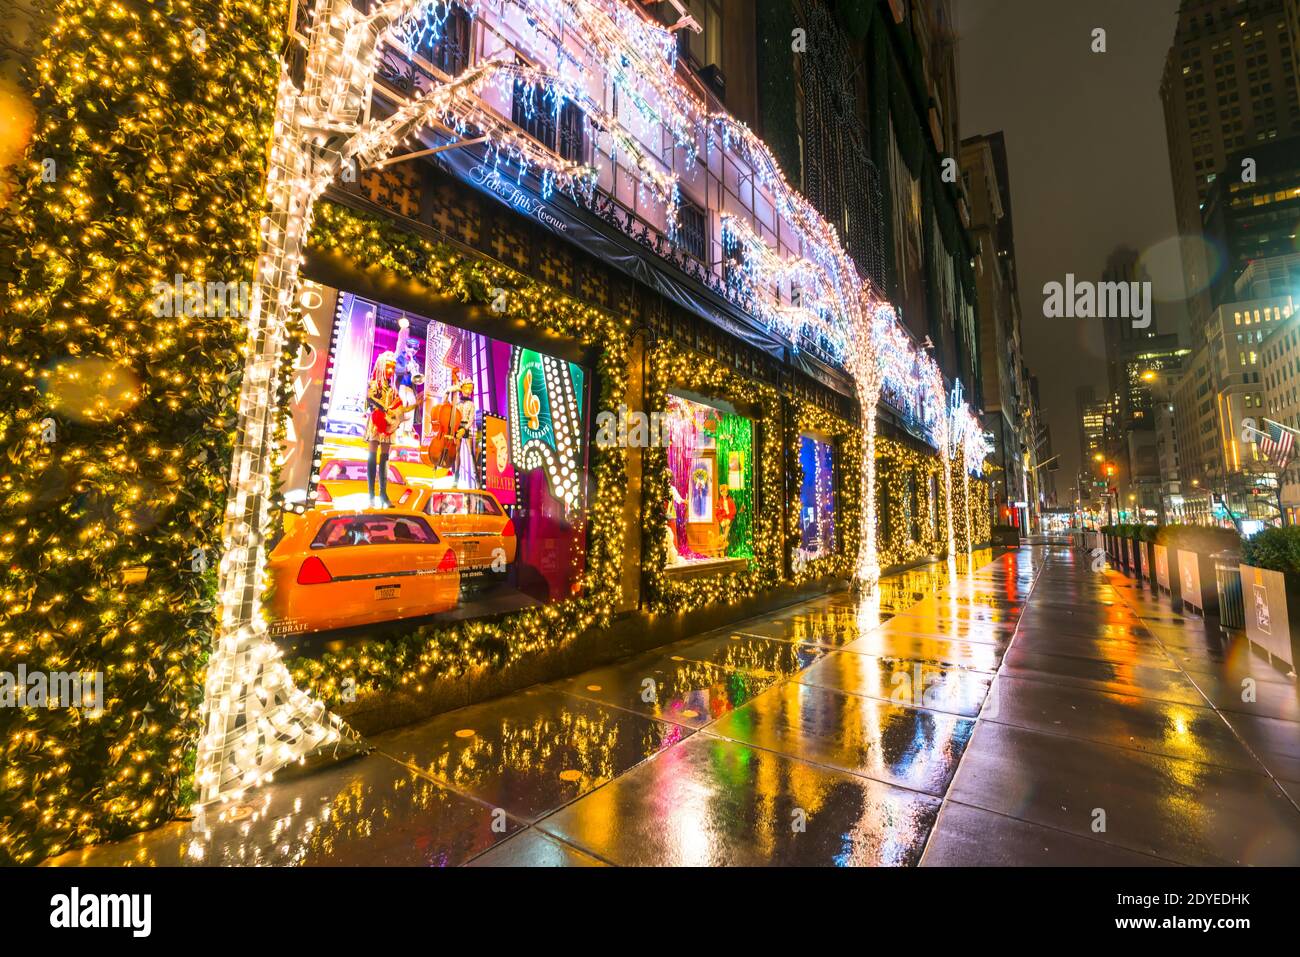 Saks Fifth Avenue revealed its Worth Avenue Holiday window displays